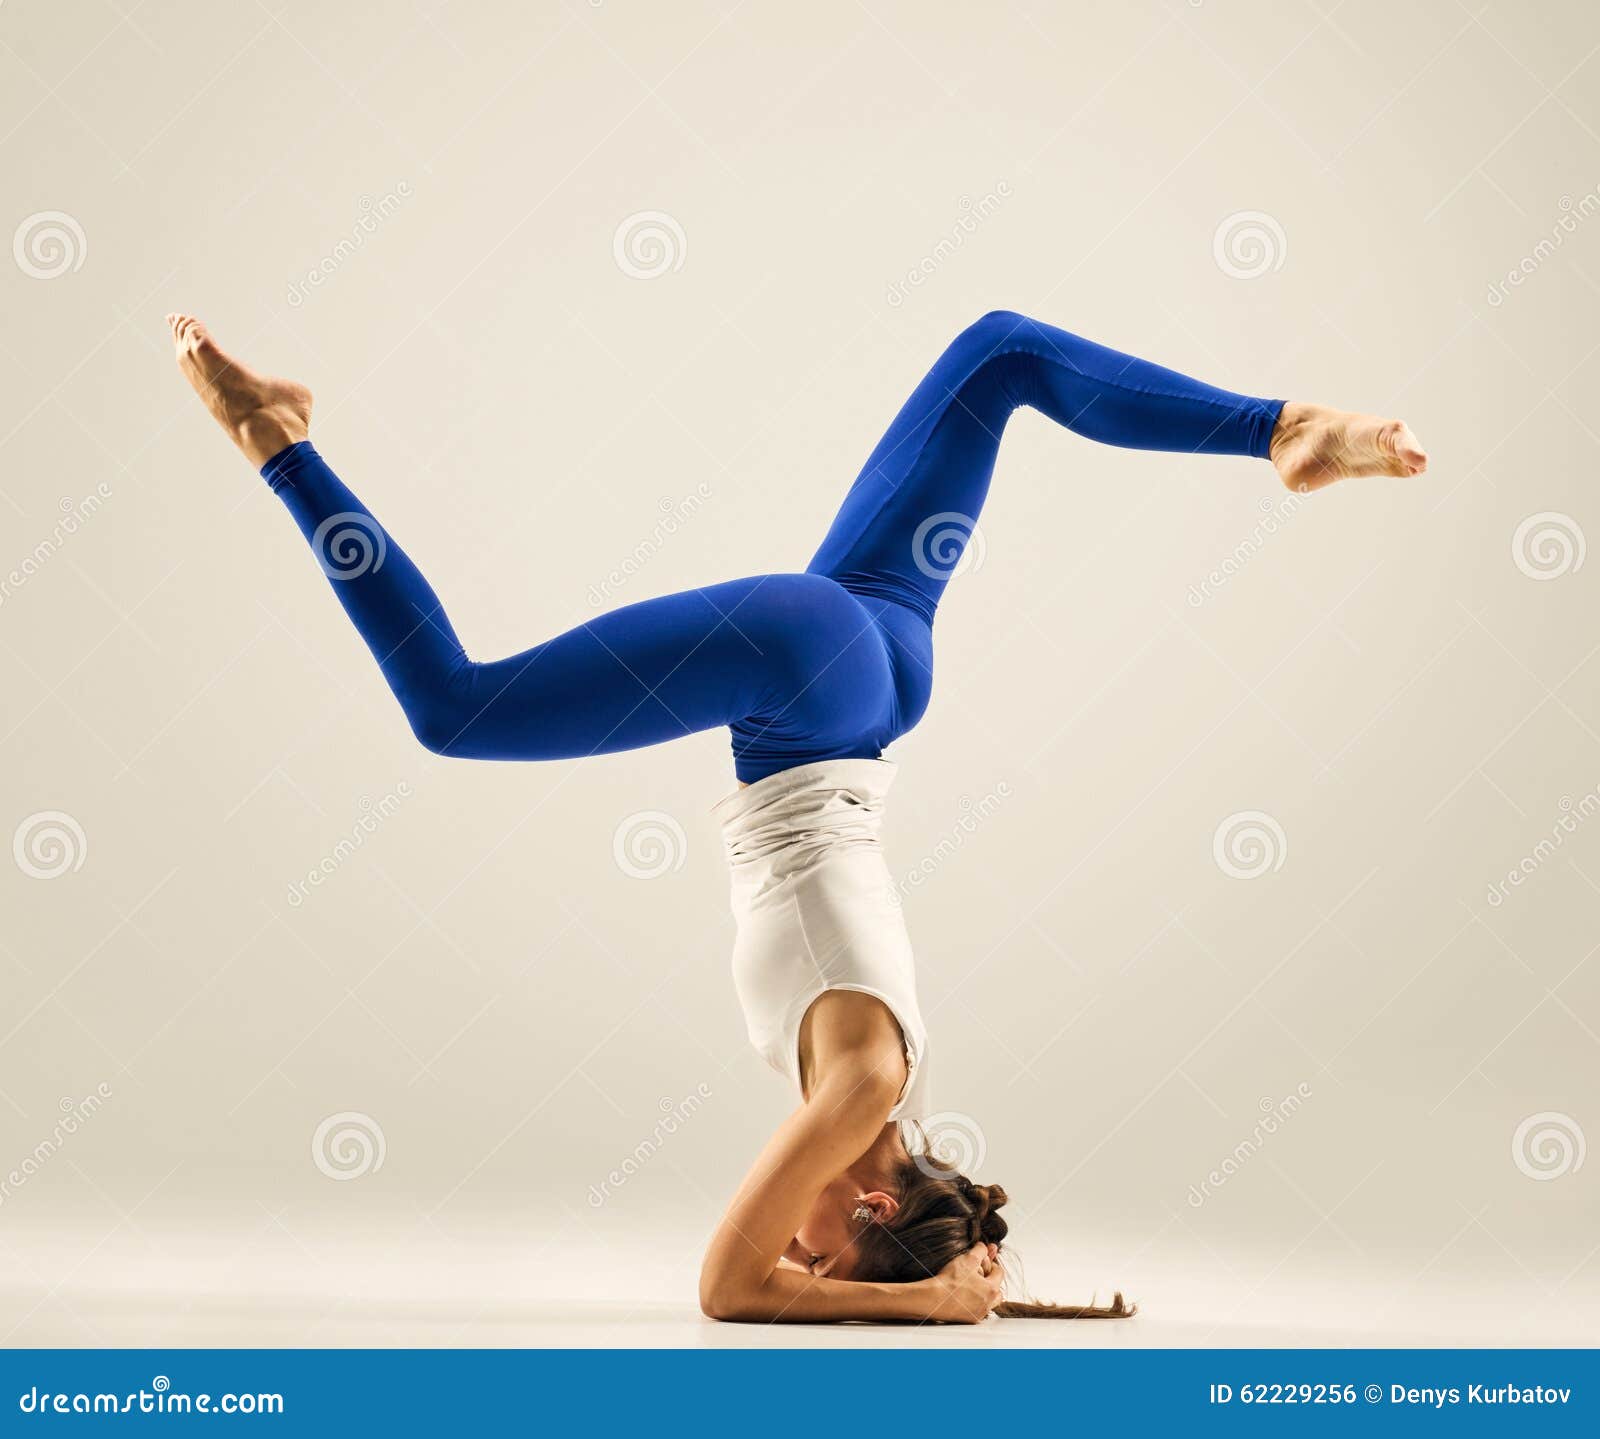 Headstand yoga pose : Sirsasana | Headstand yoga poses, Yoga postures, Yoga  motivation